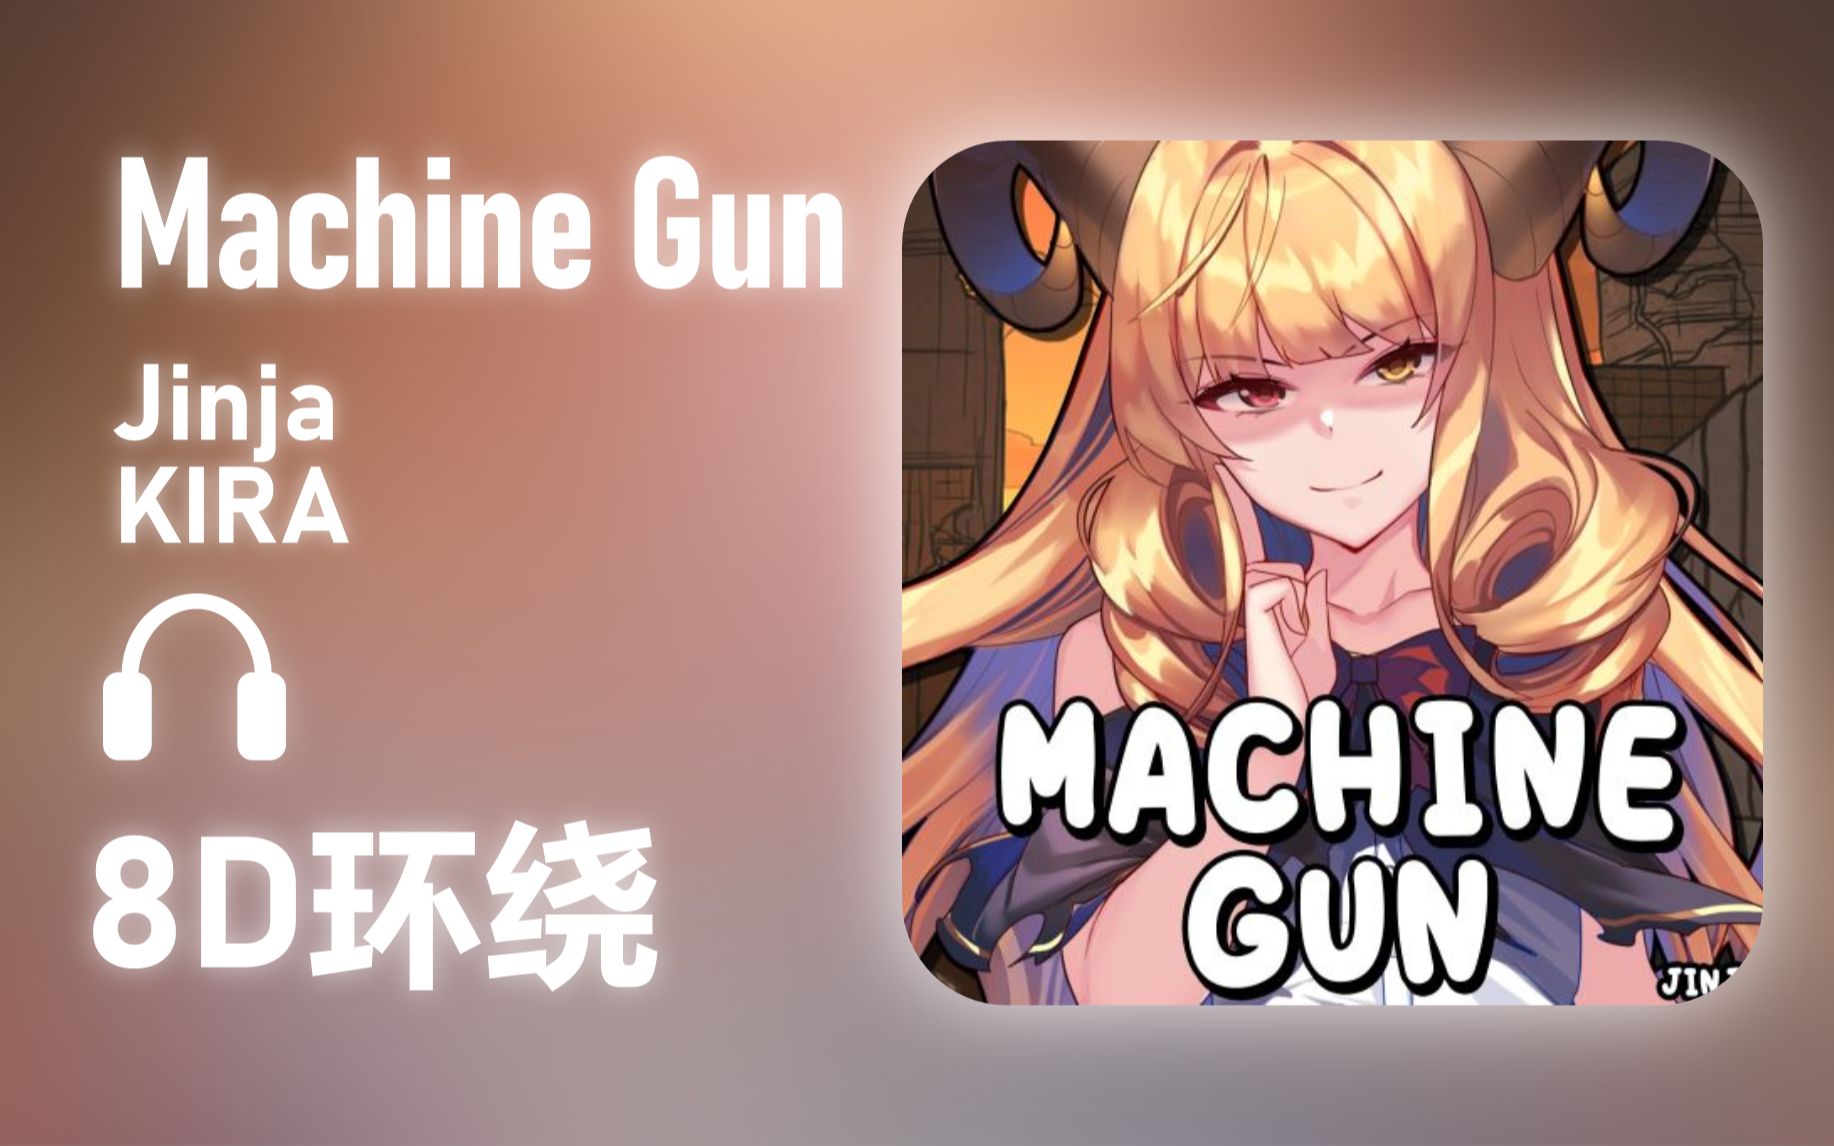 【8D环绕】《Machine Gun》-Jinja/KIRA #523